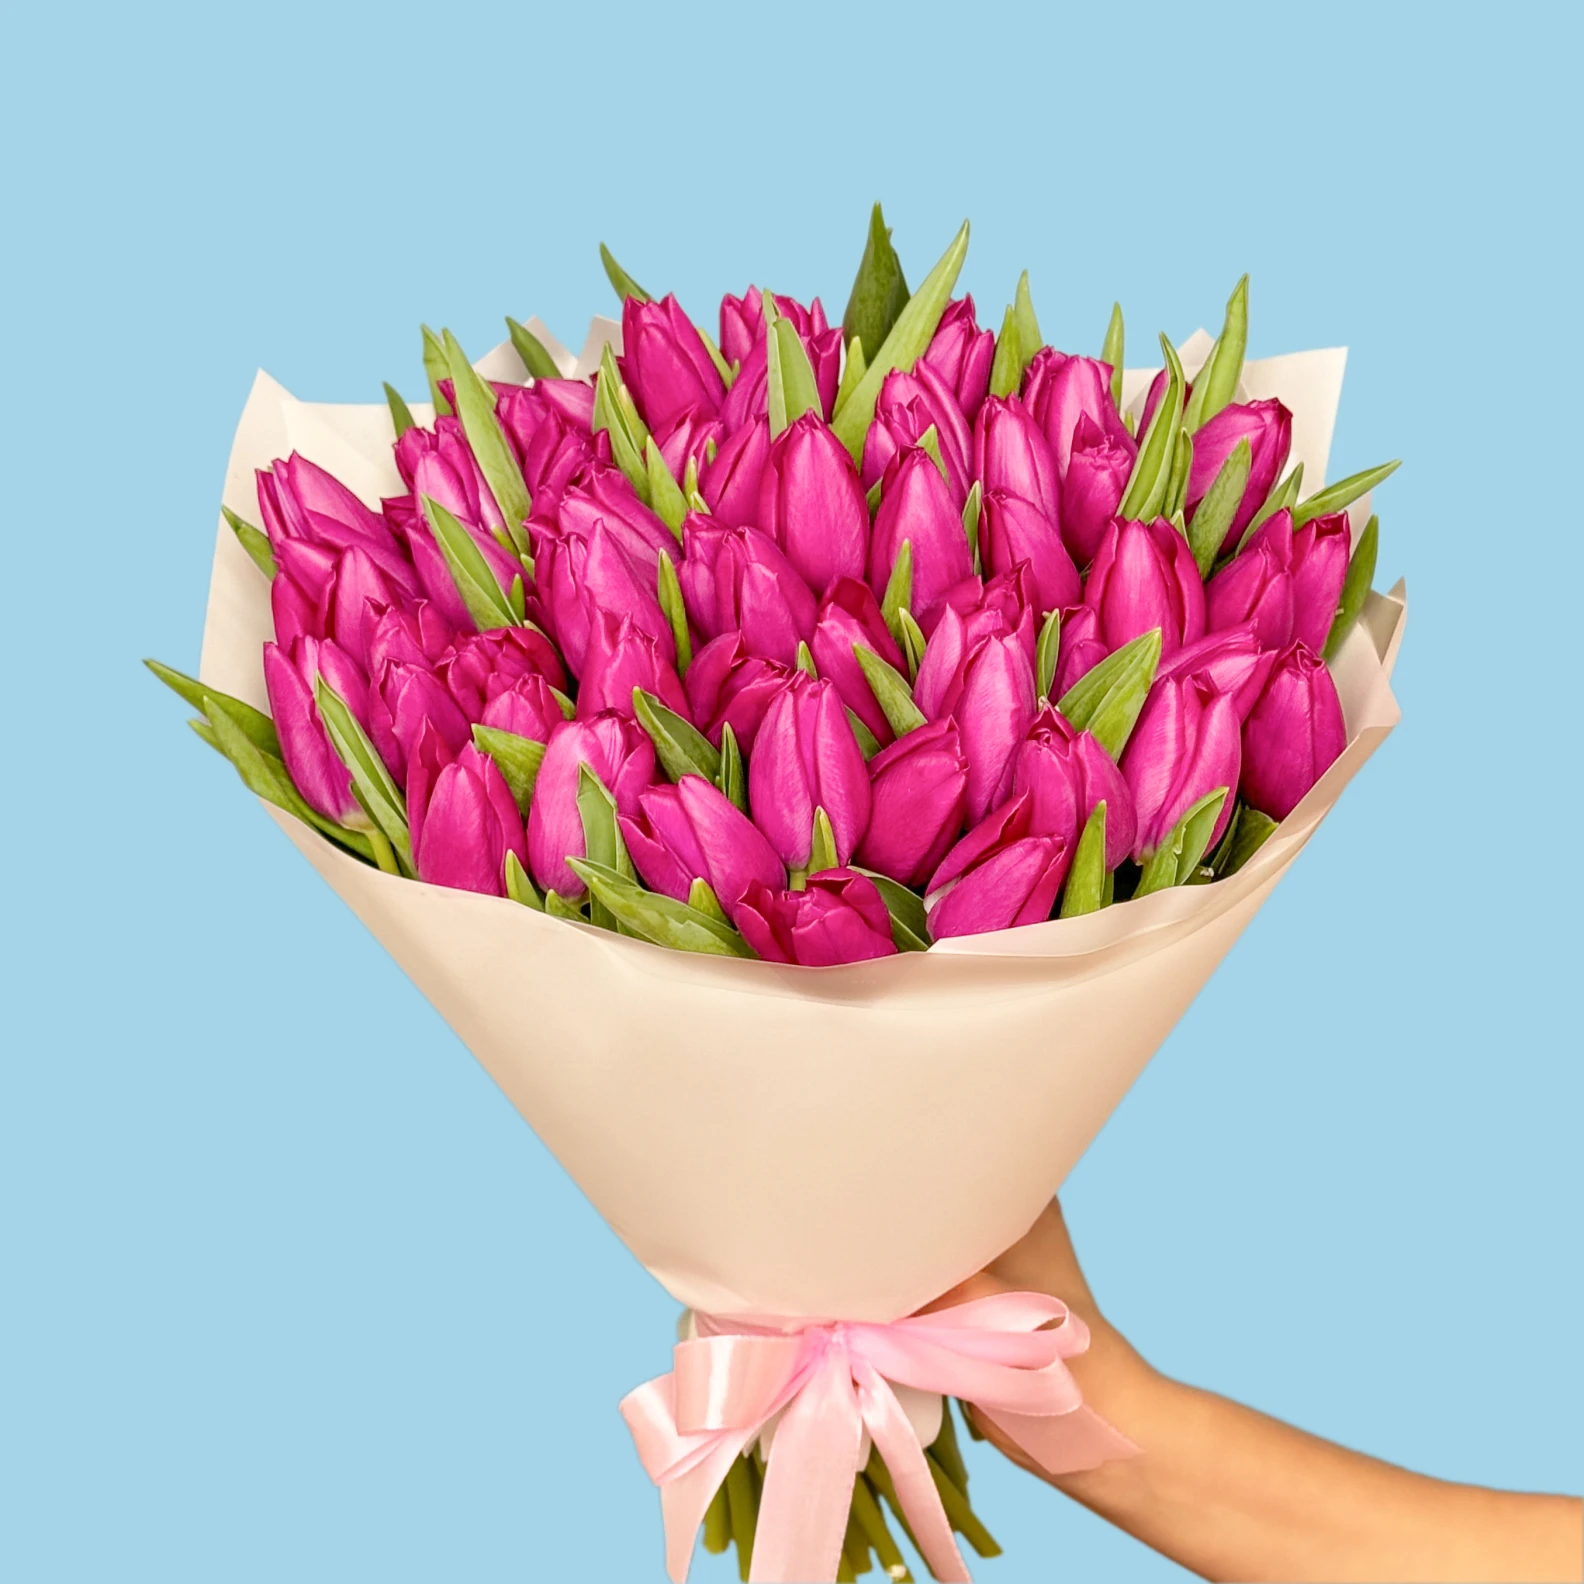 70 Pink Tulips - image №2